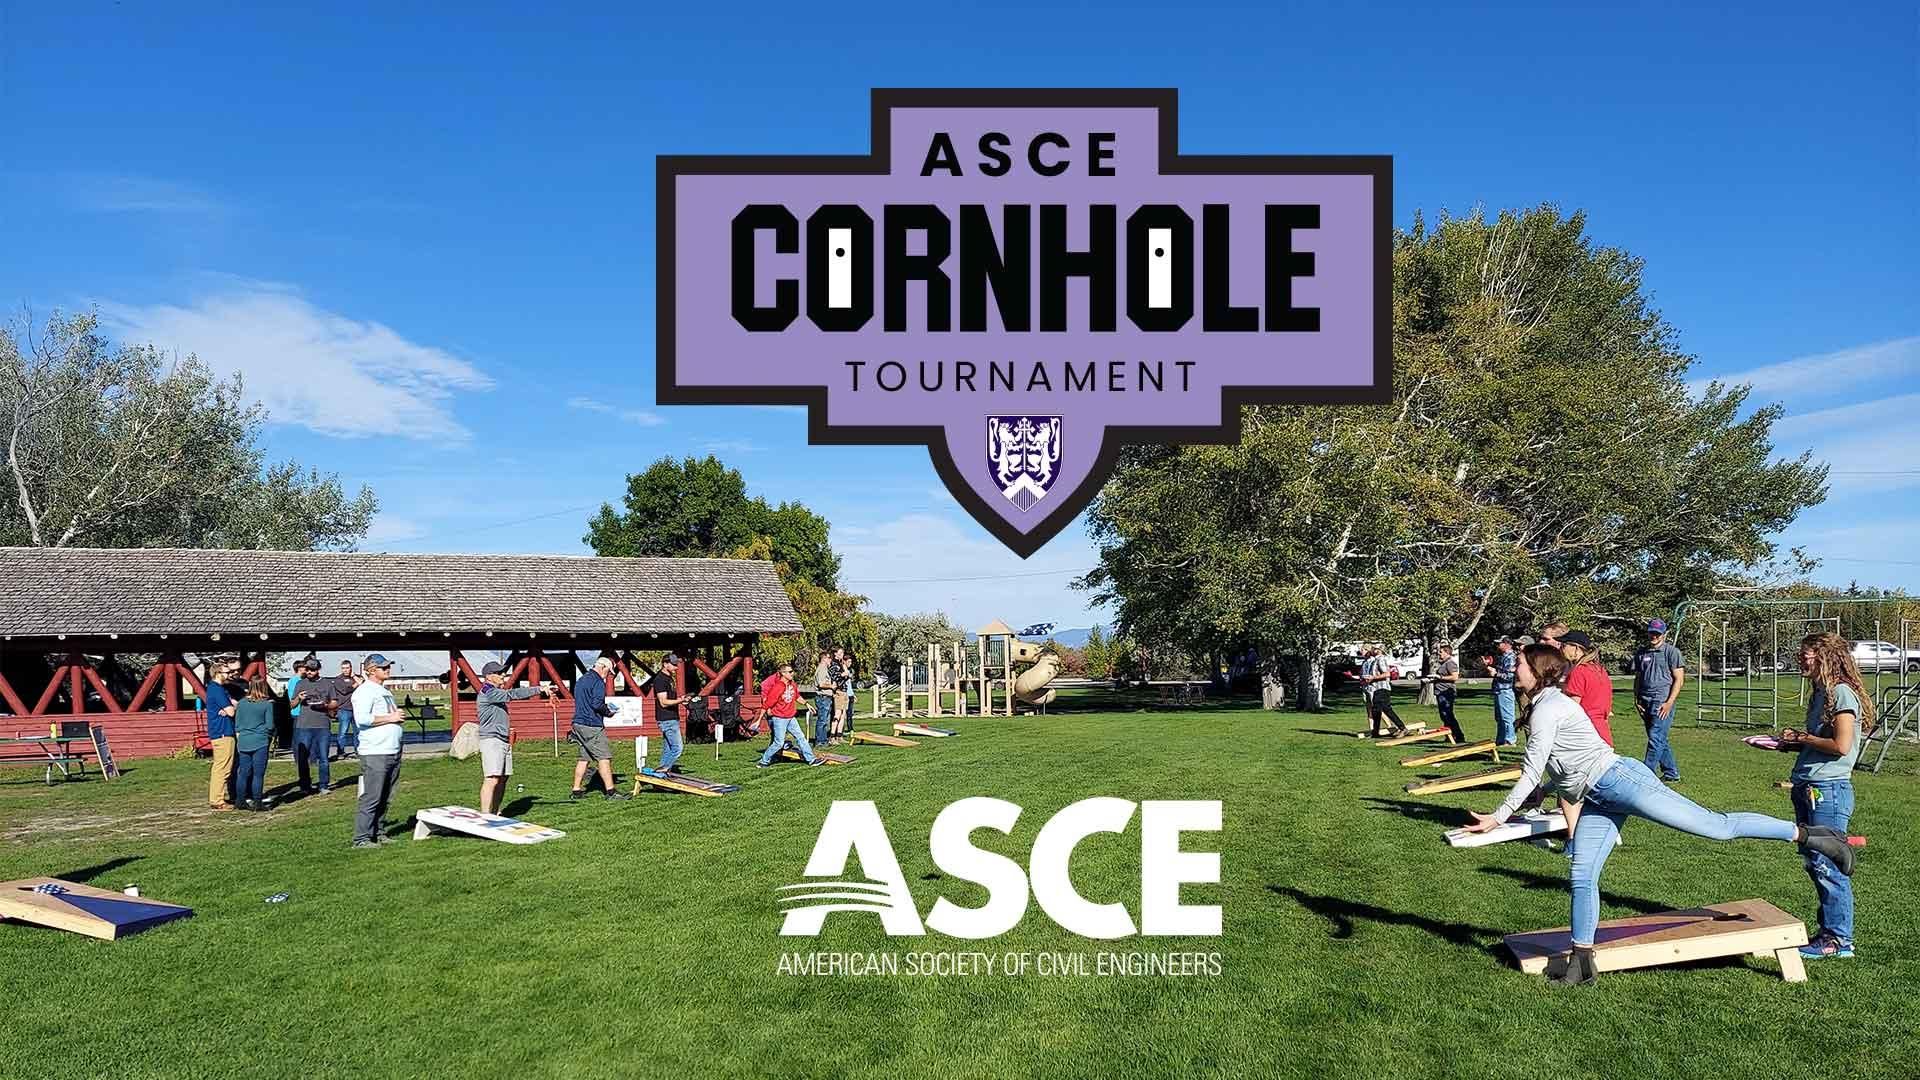 ASCE Cornhole Tournament - Engineering